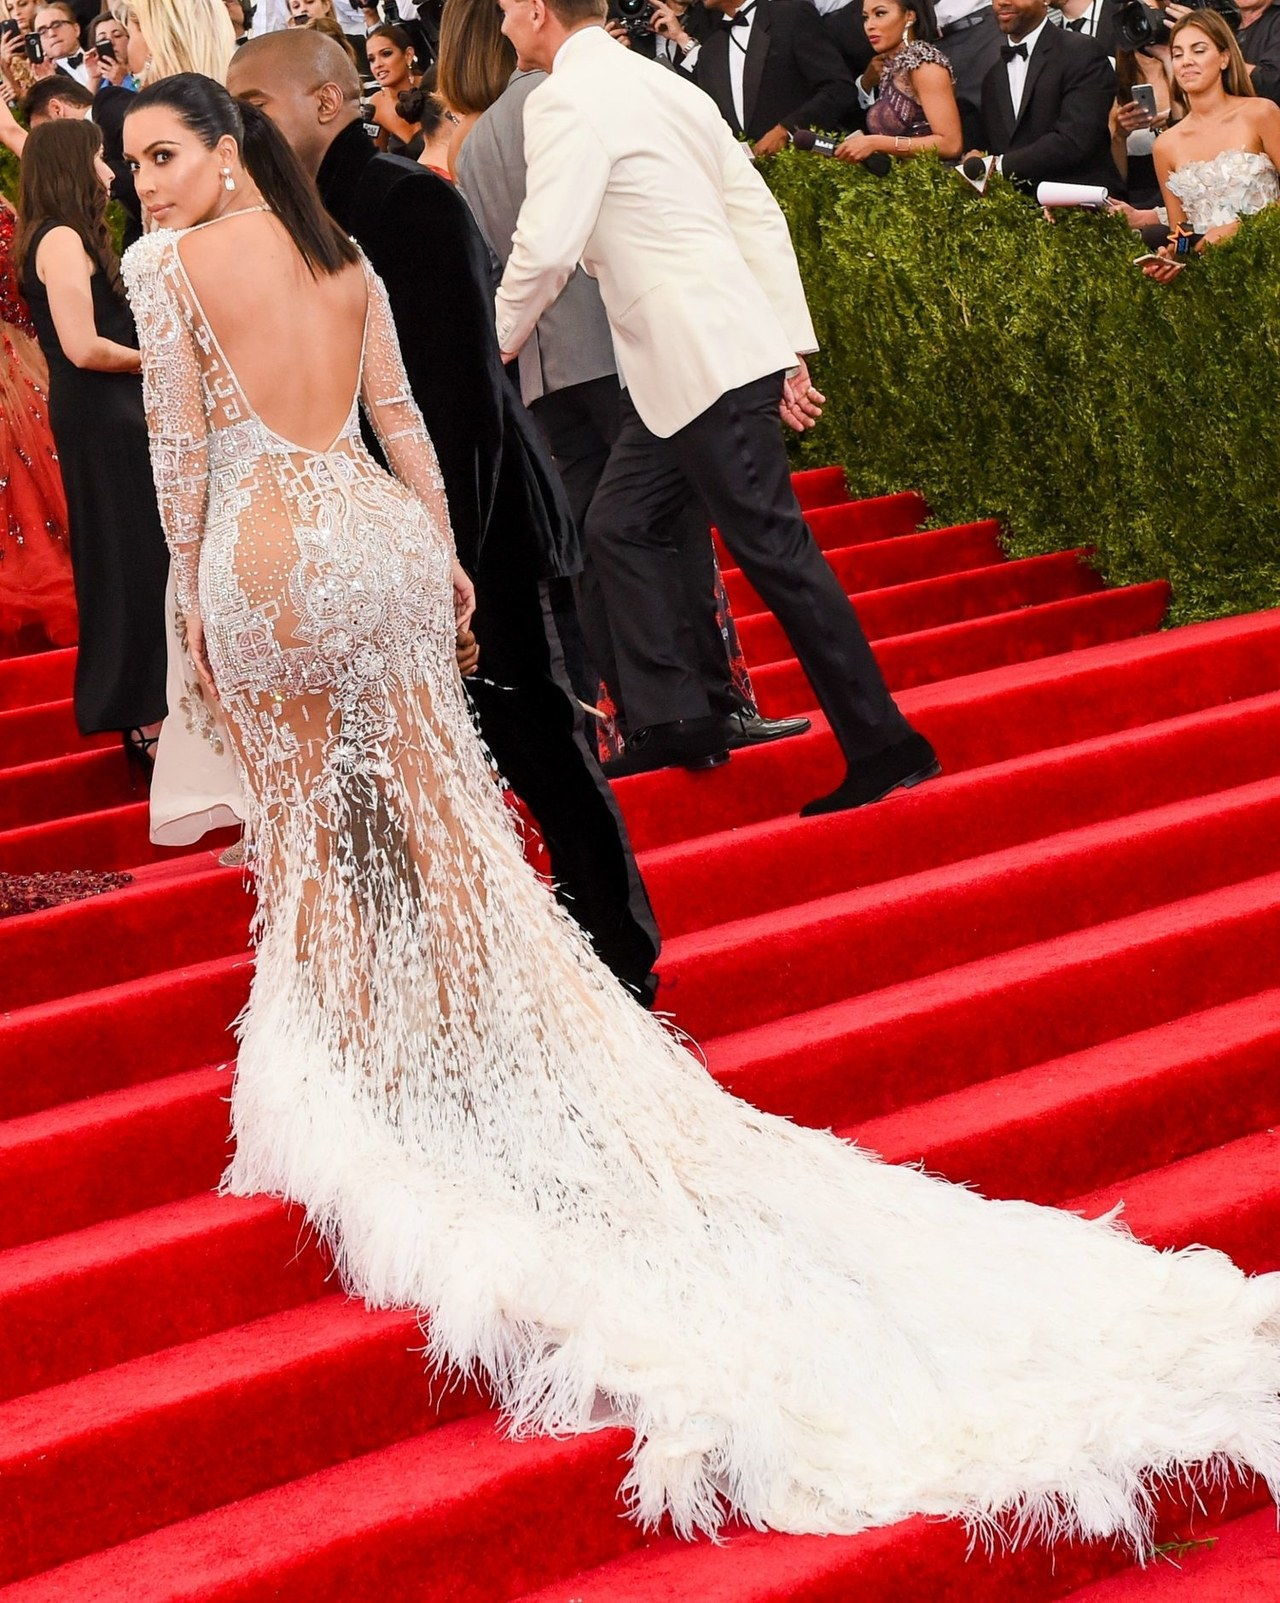 金 kardashian white roberto cavalli dress met gala 2015